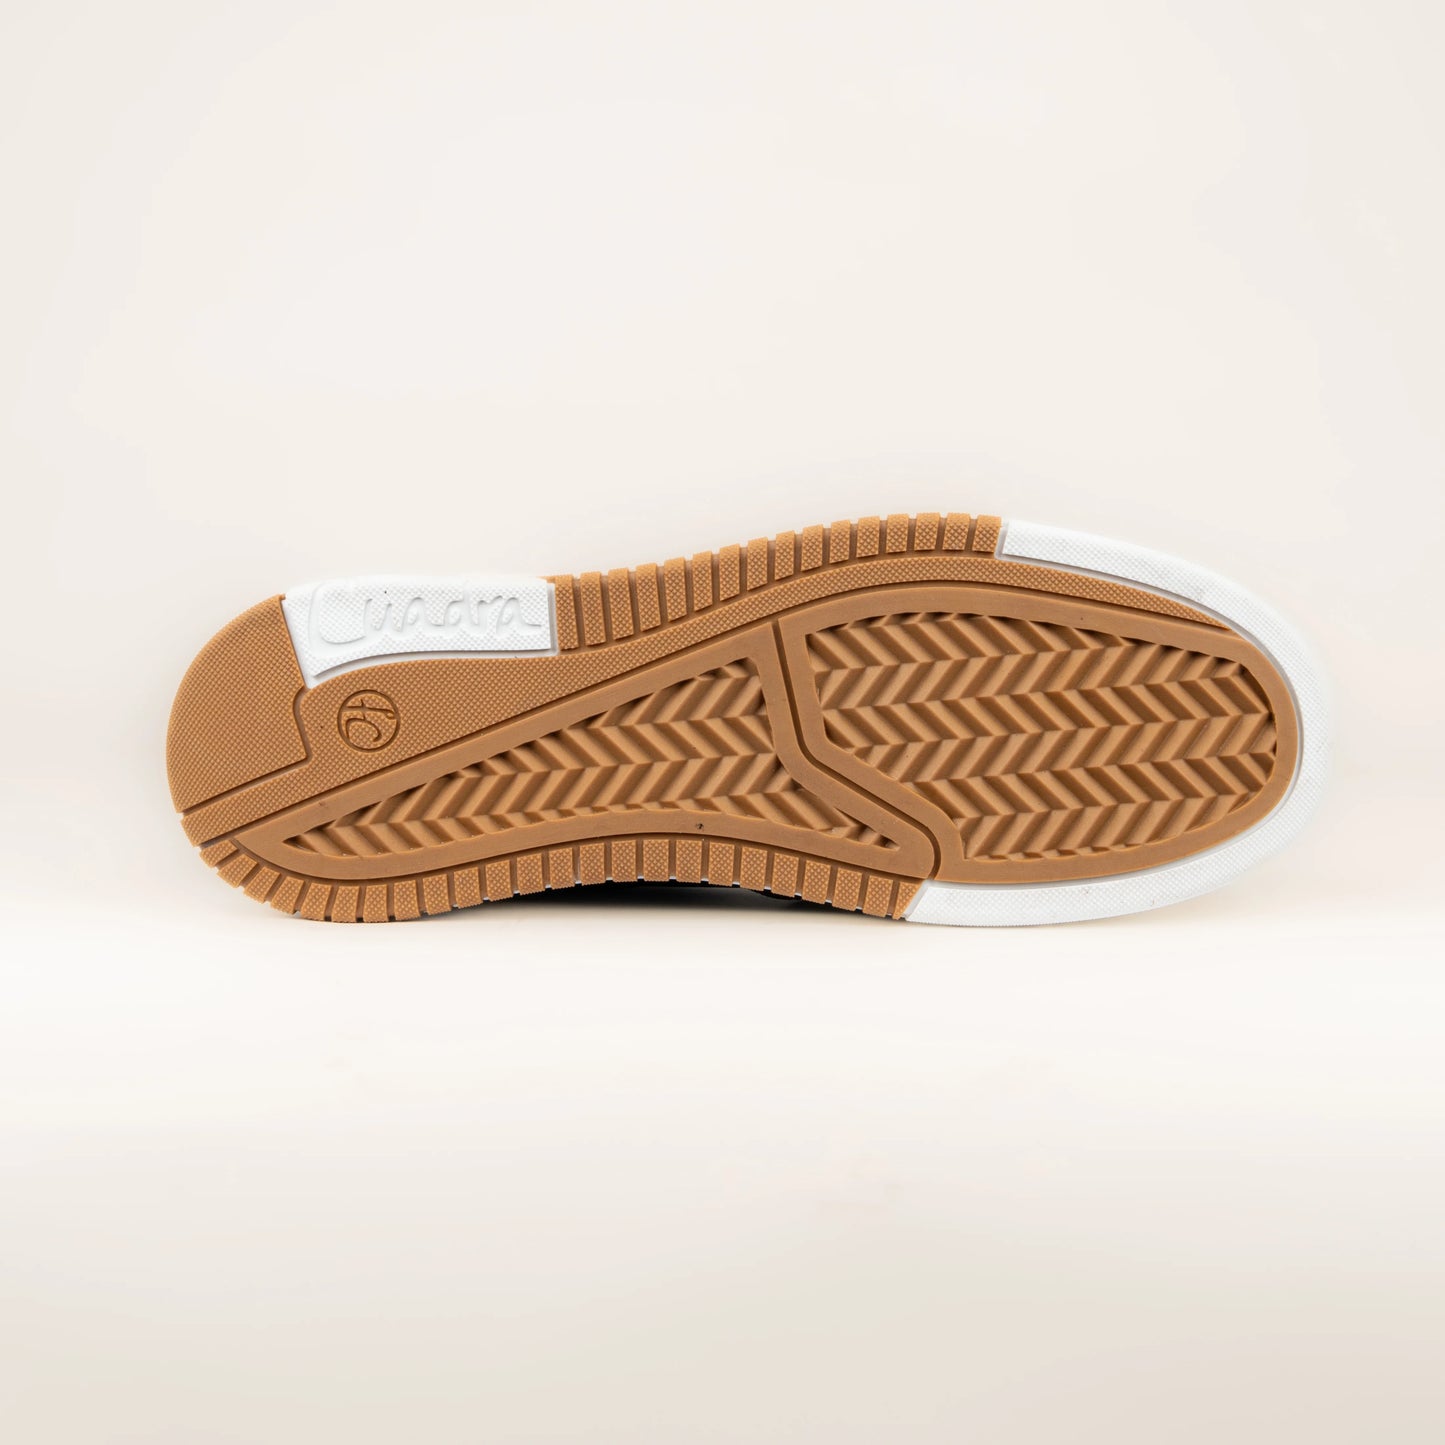 54QPBTS - Cuadra chocolate casual fashion python skin sneakers for men